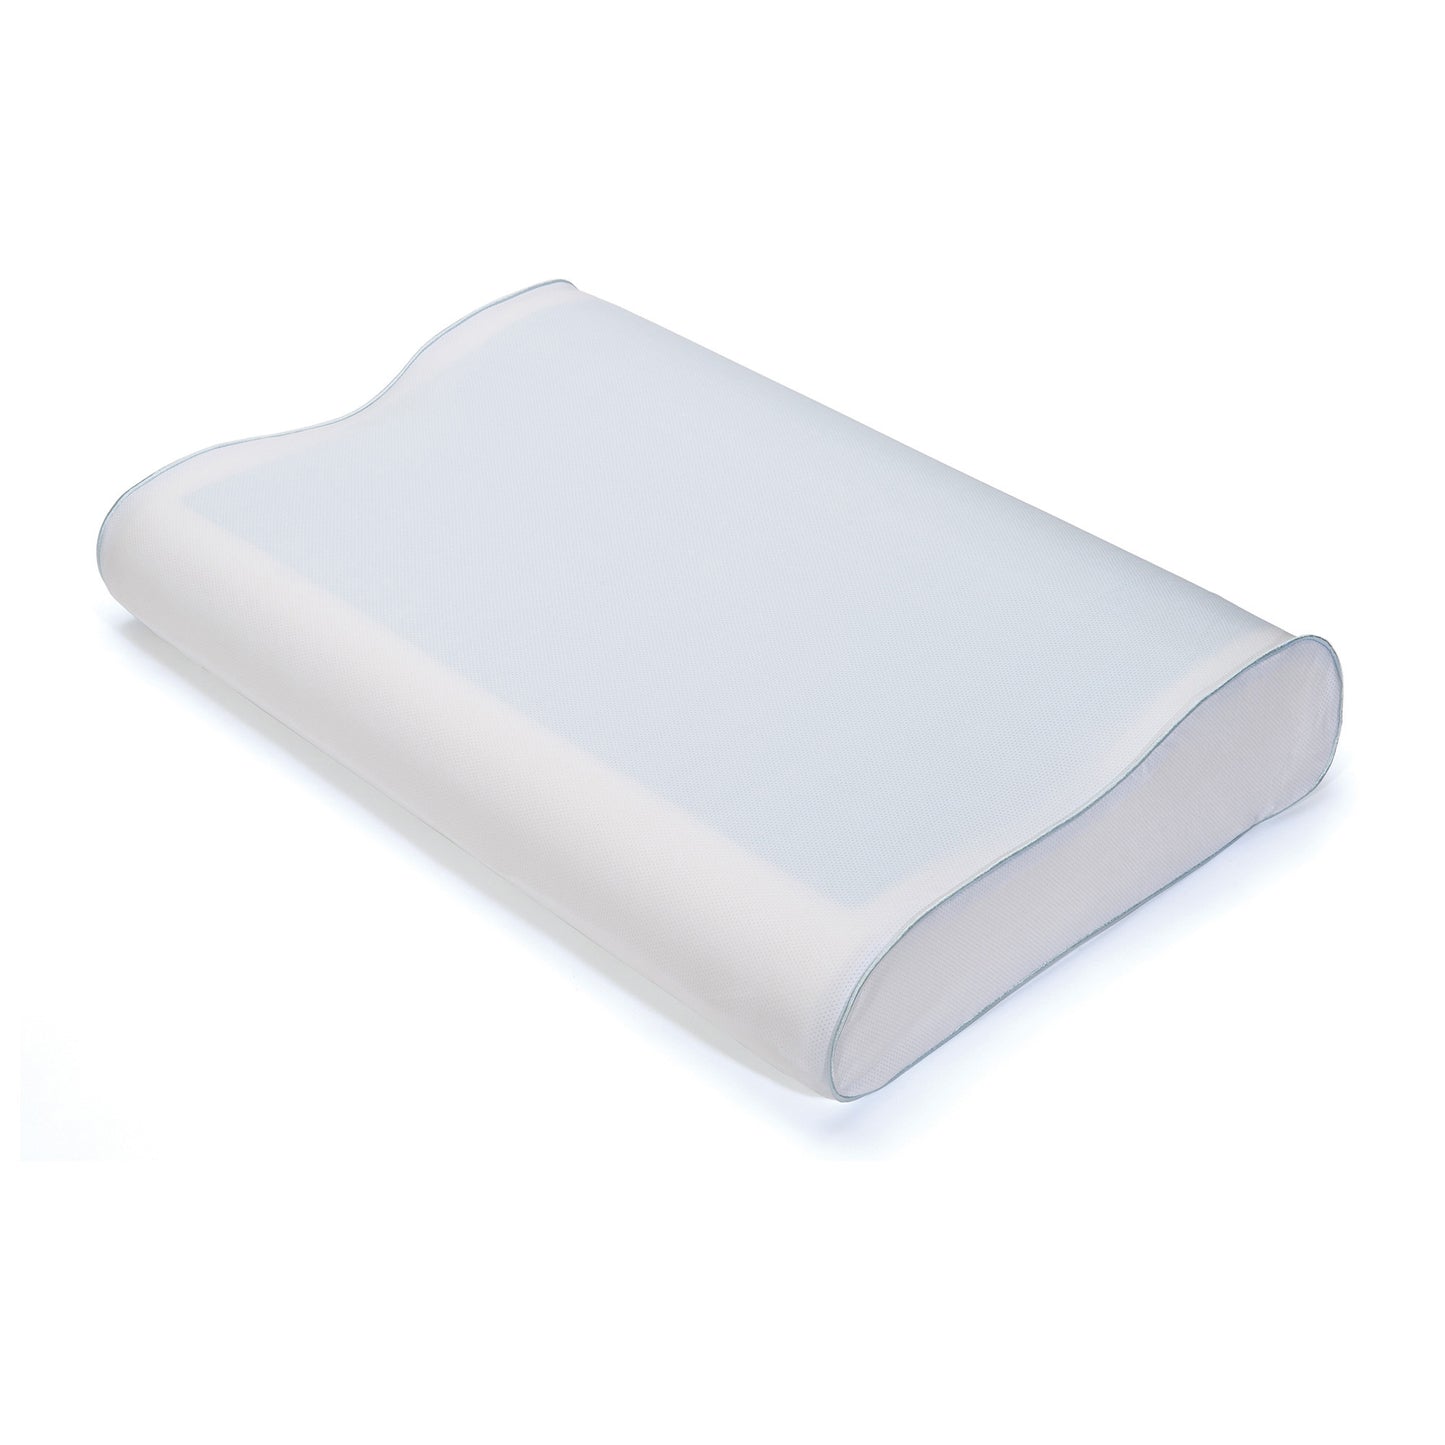 ObusForme Contour Thermagel Memory Foam Pillow - 15-07349